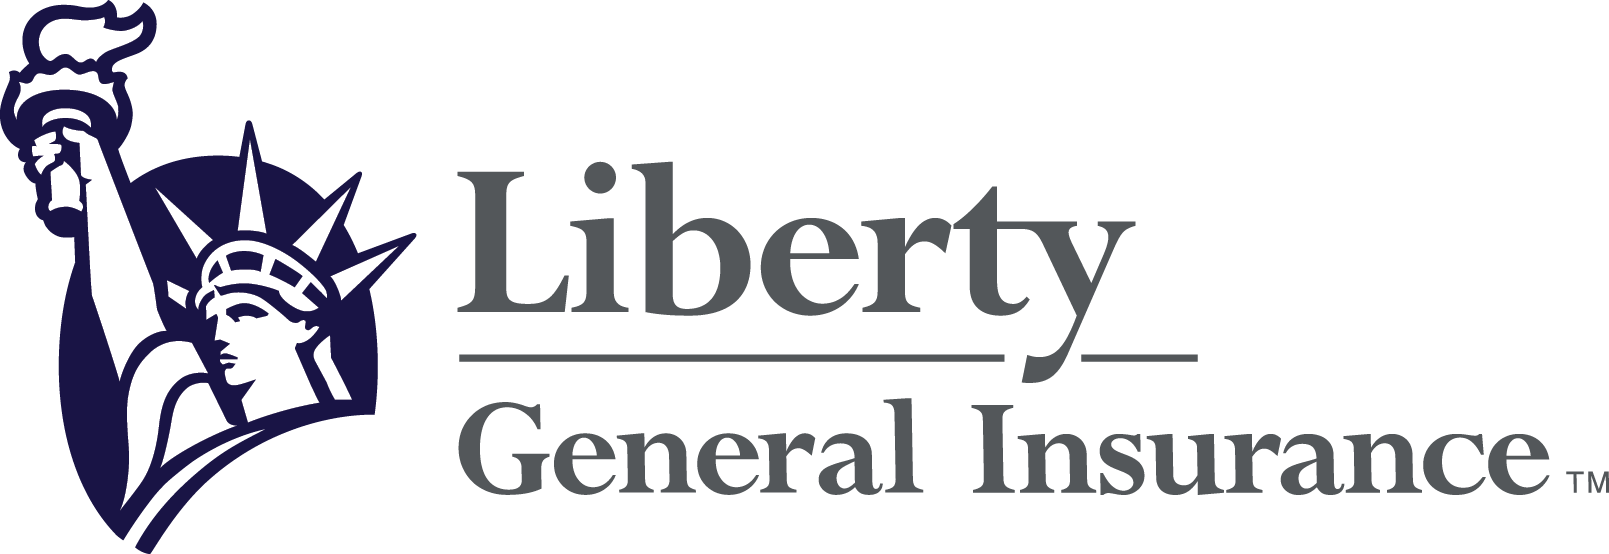 Liberty General Insurance Ltd